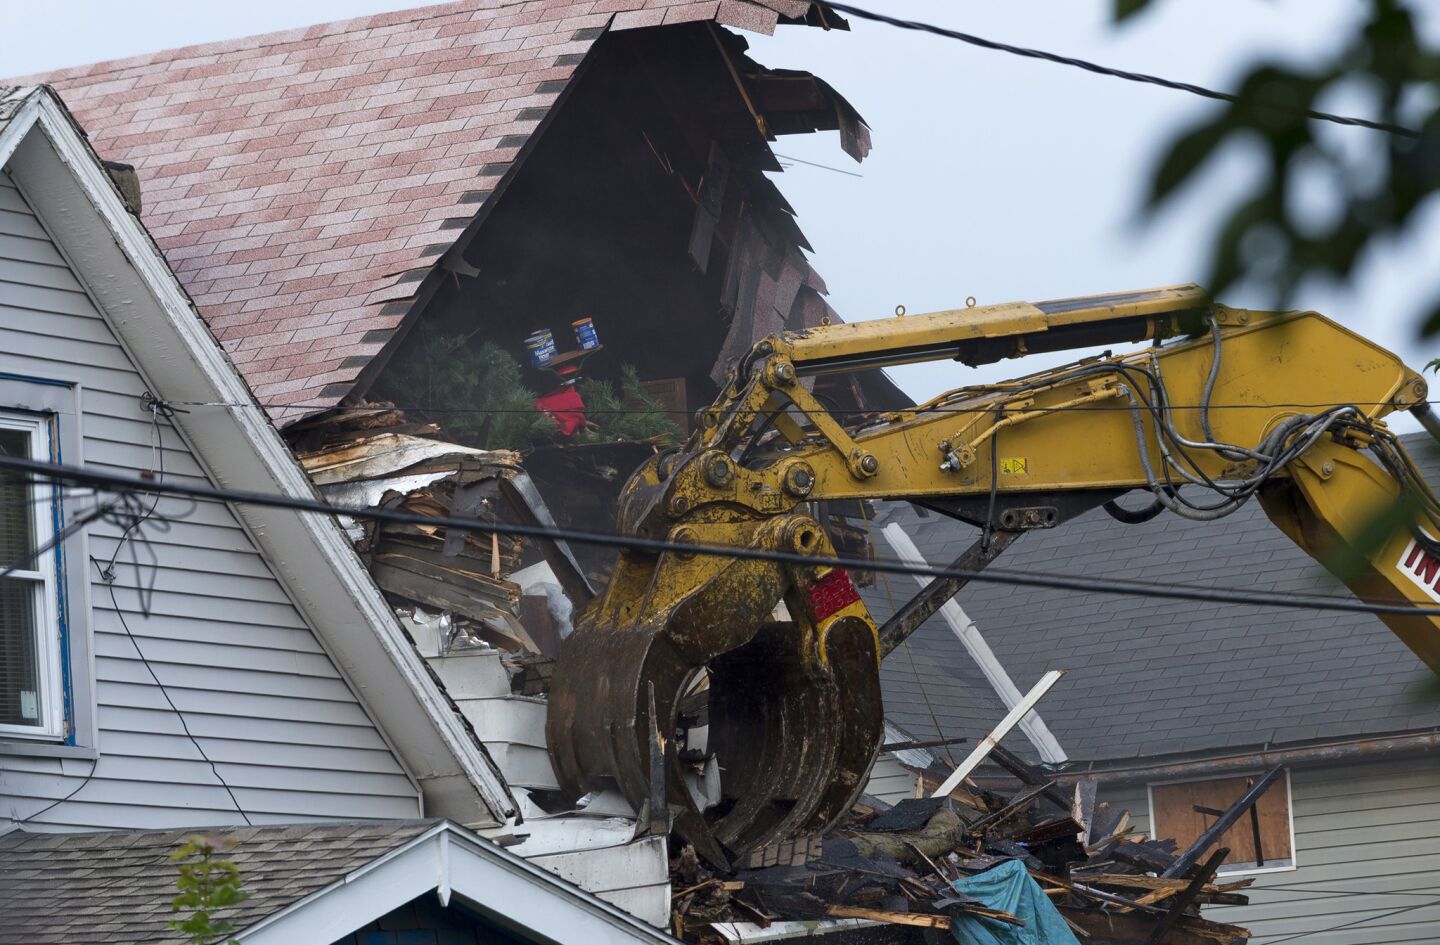 Ariel Castro's home demolished